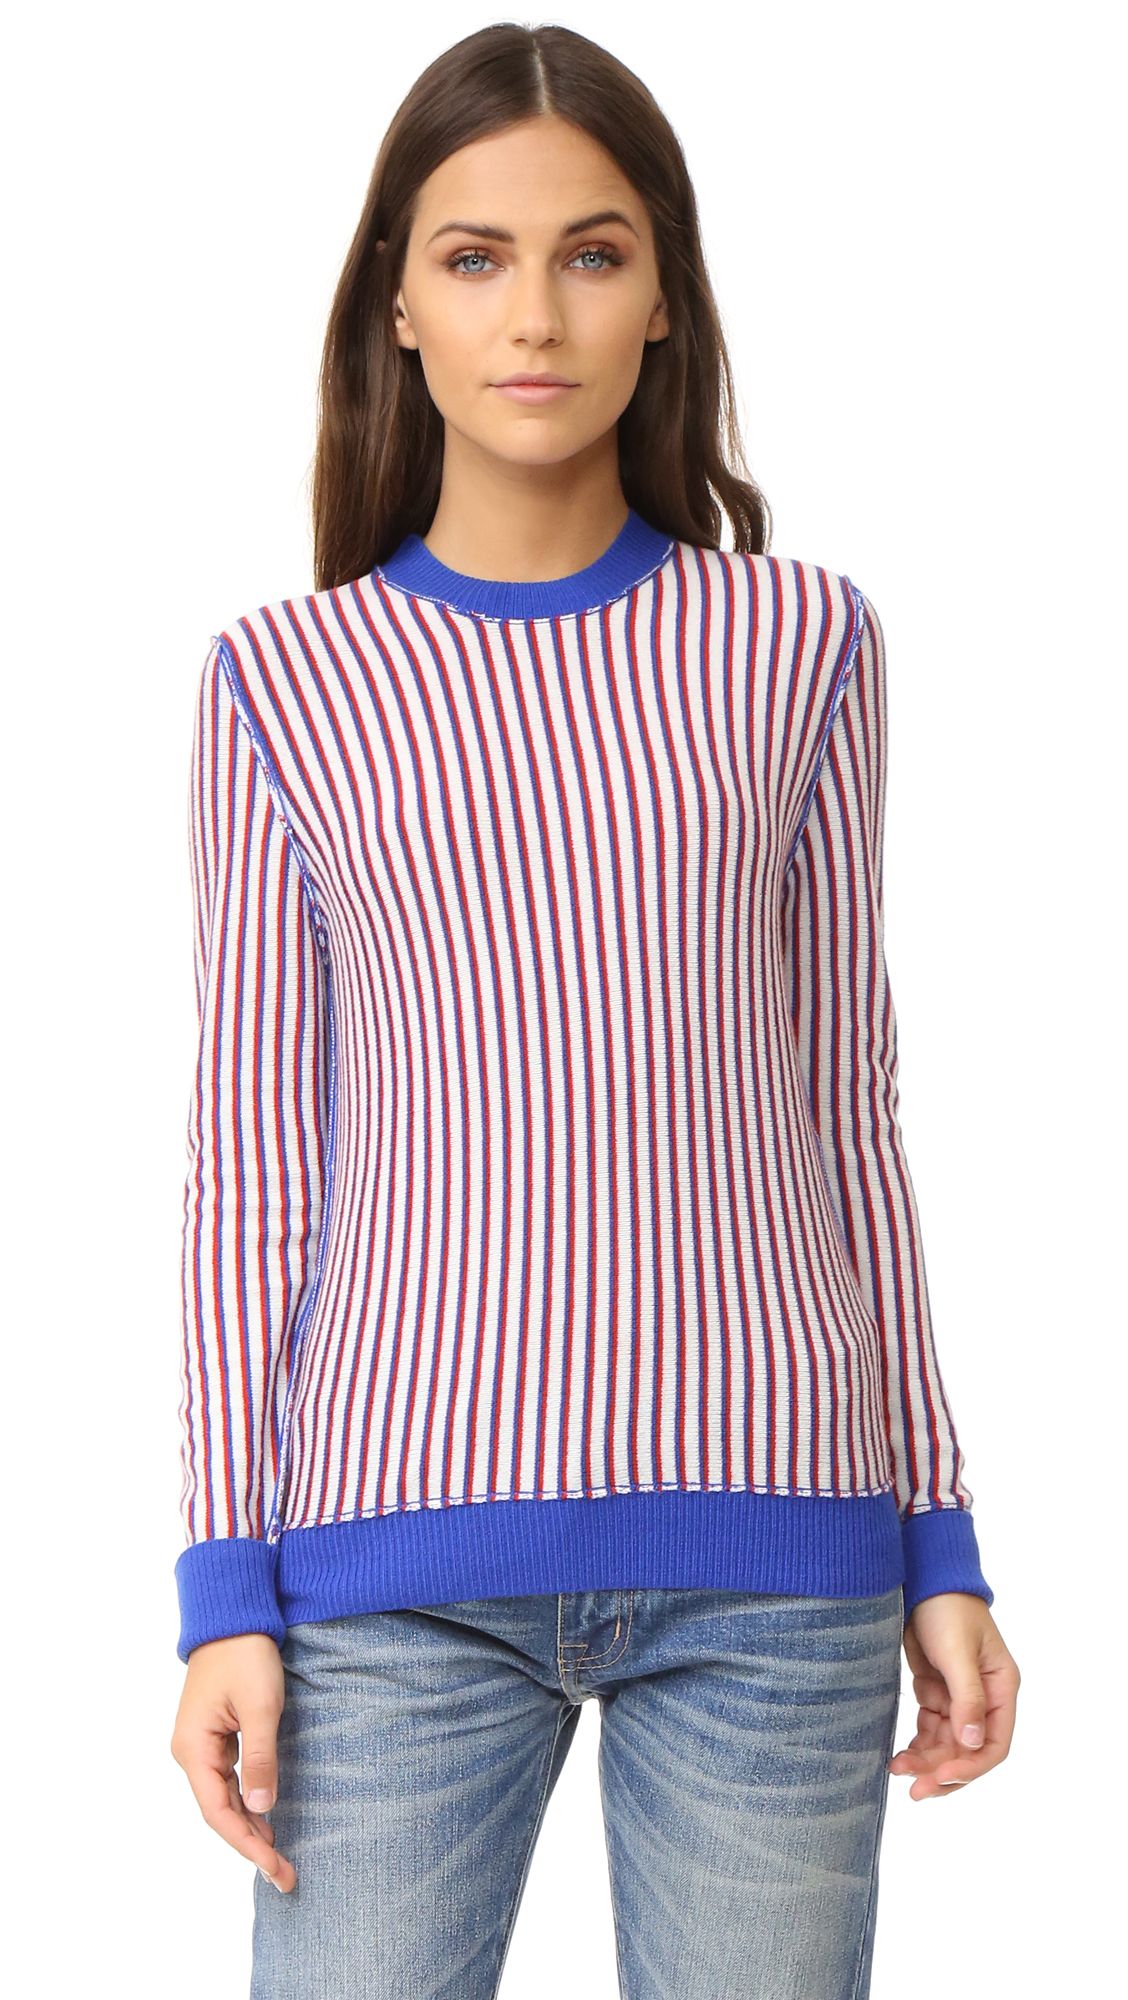 Raquel Allegra Fitted Crew Sweater - Cream Stripe | Shopbop